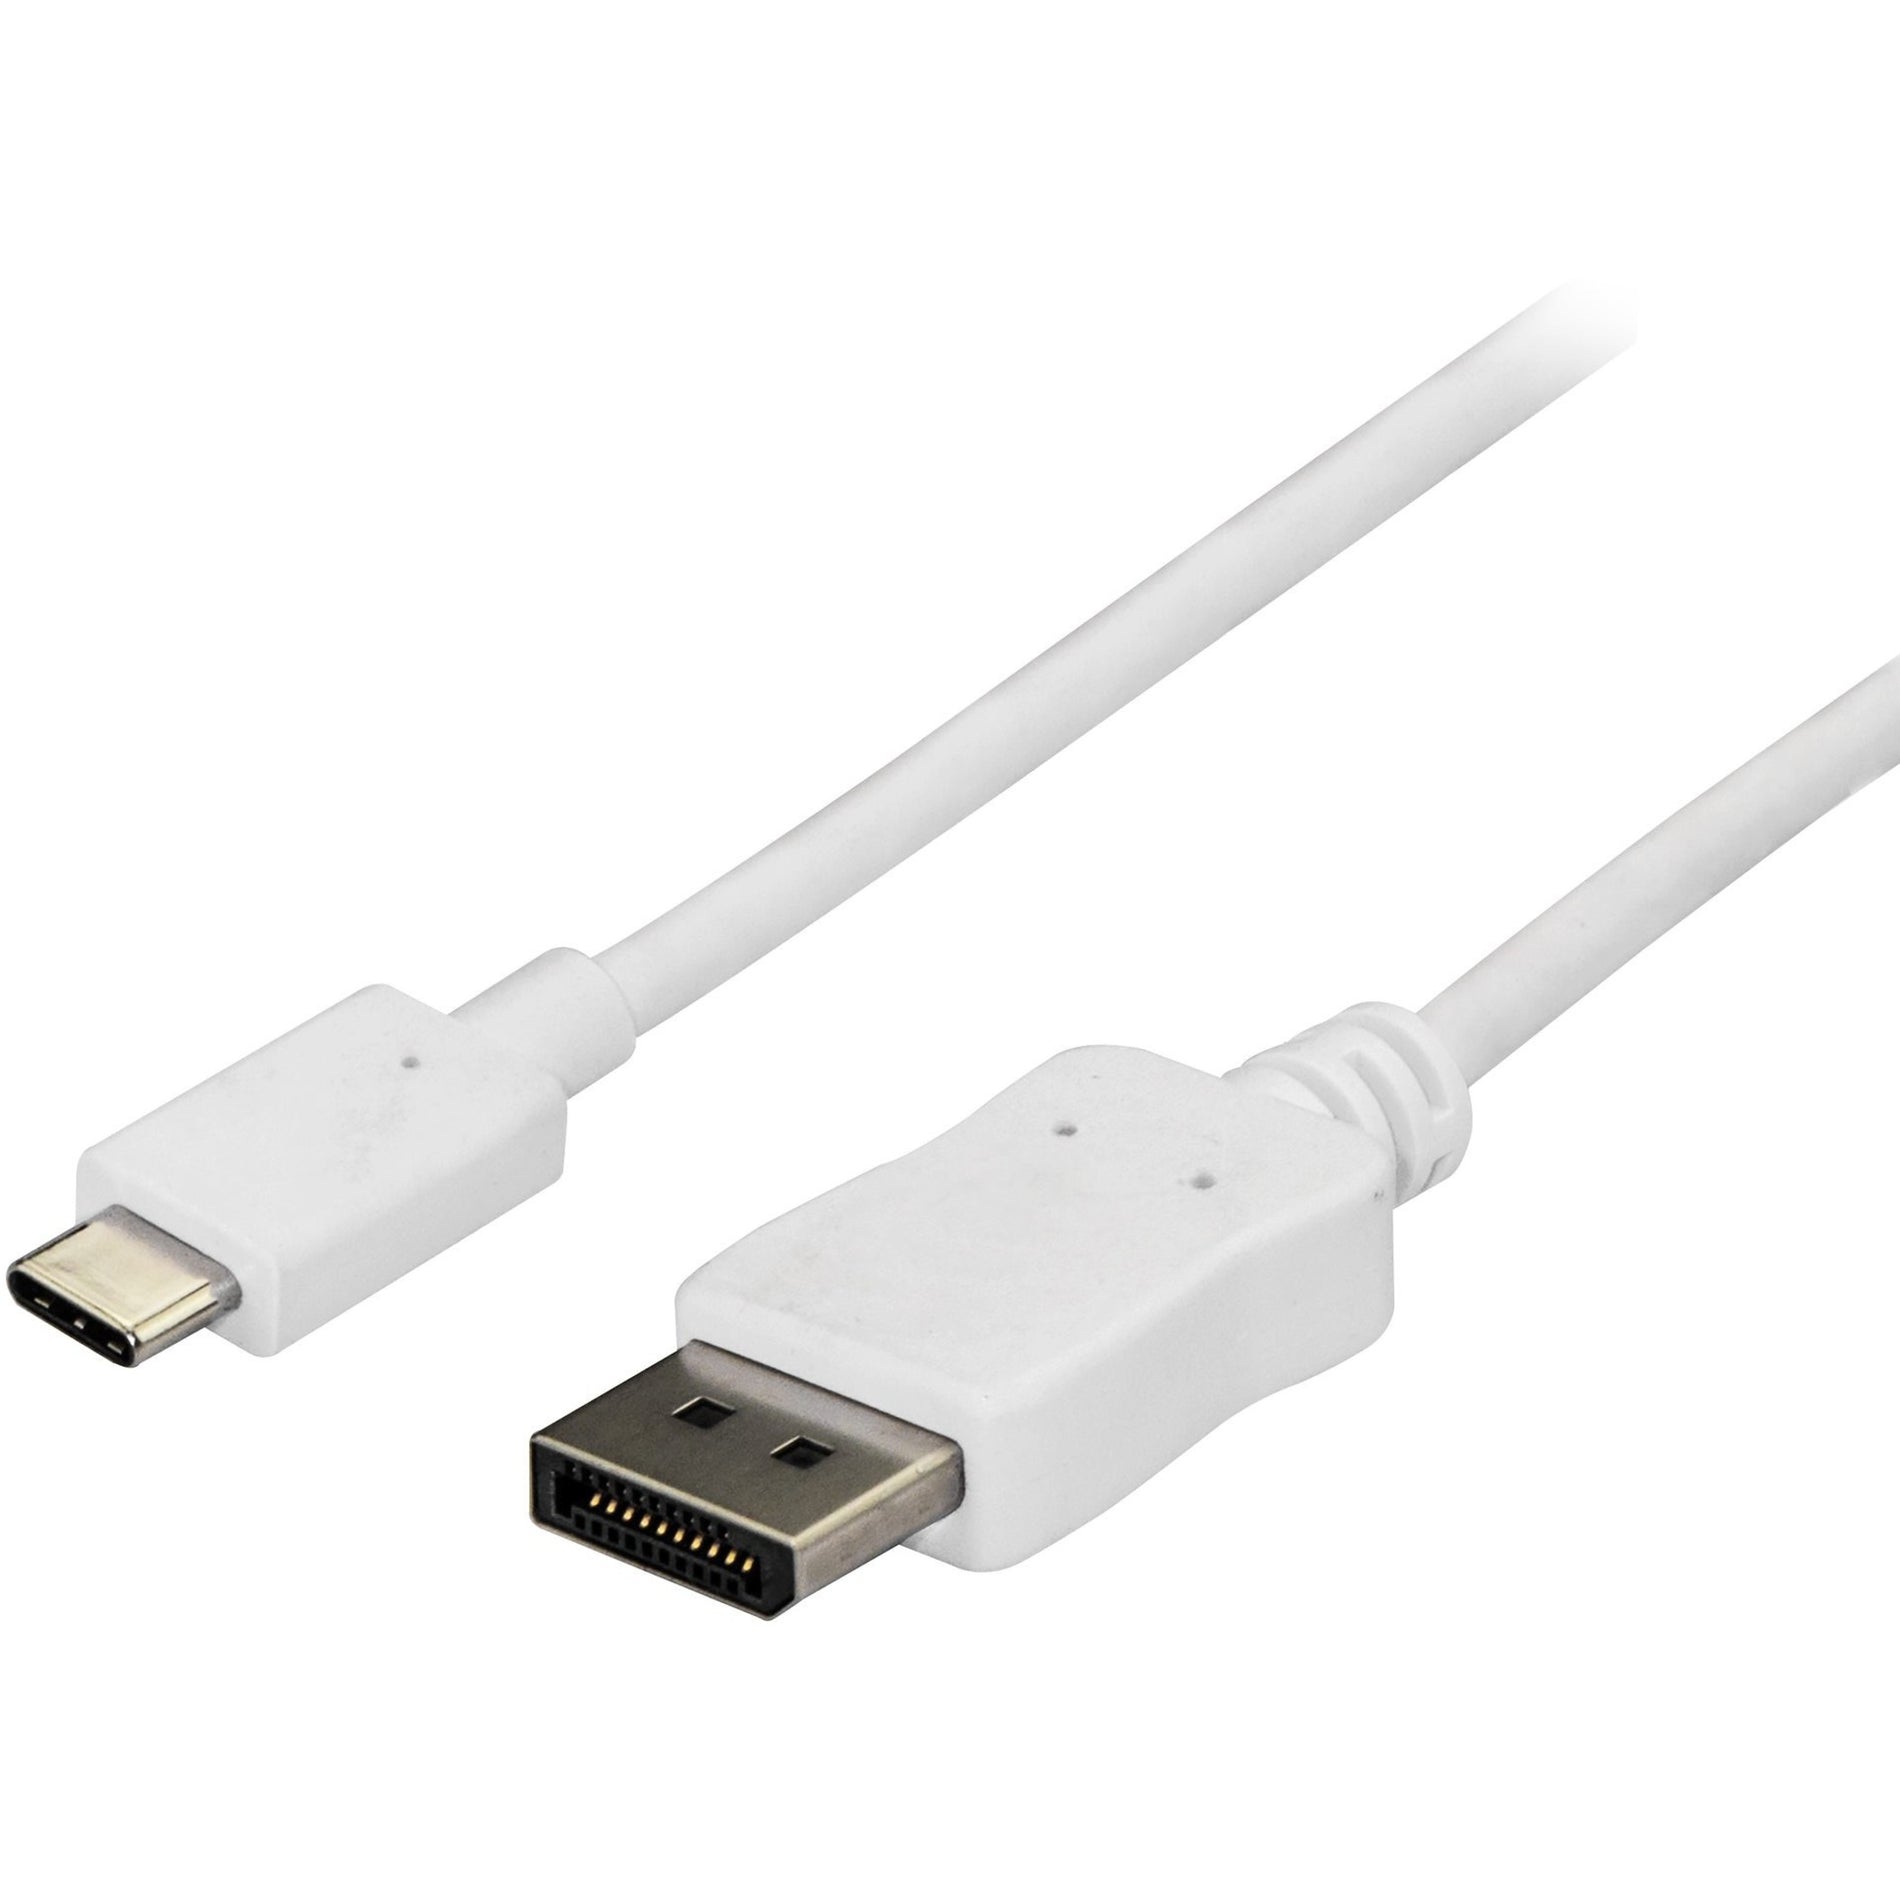 StarTech.com CDP2DPMM6W 6 ft / 1.8m USB C to DisplayPort Cable, 4K 60Hz, White